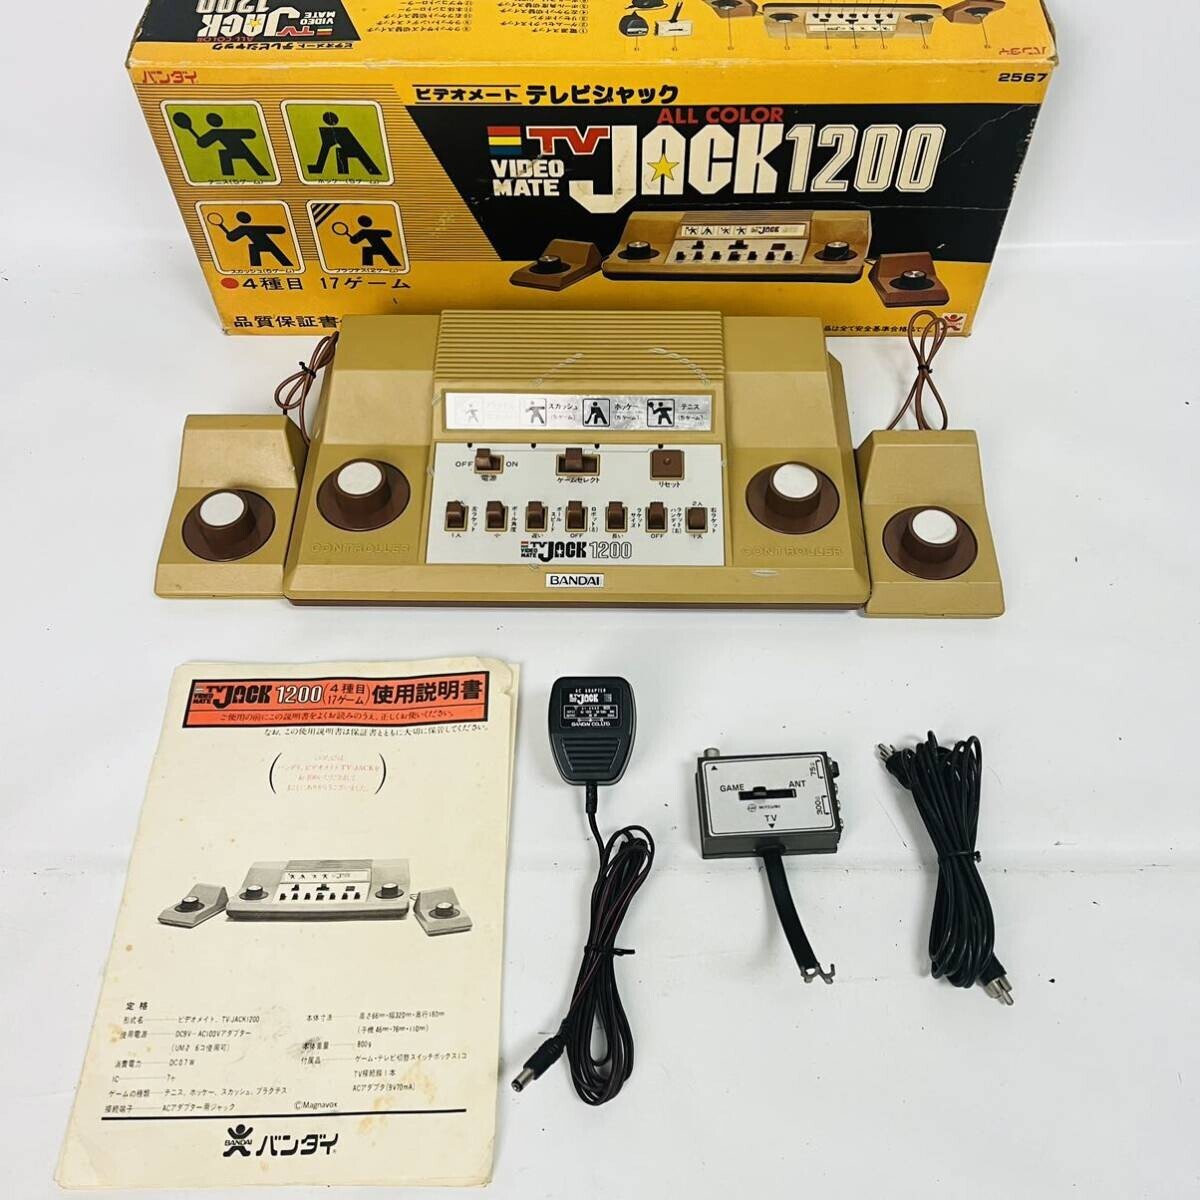 Bandai TV Jack 1200 Console